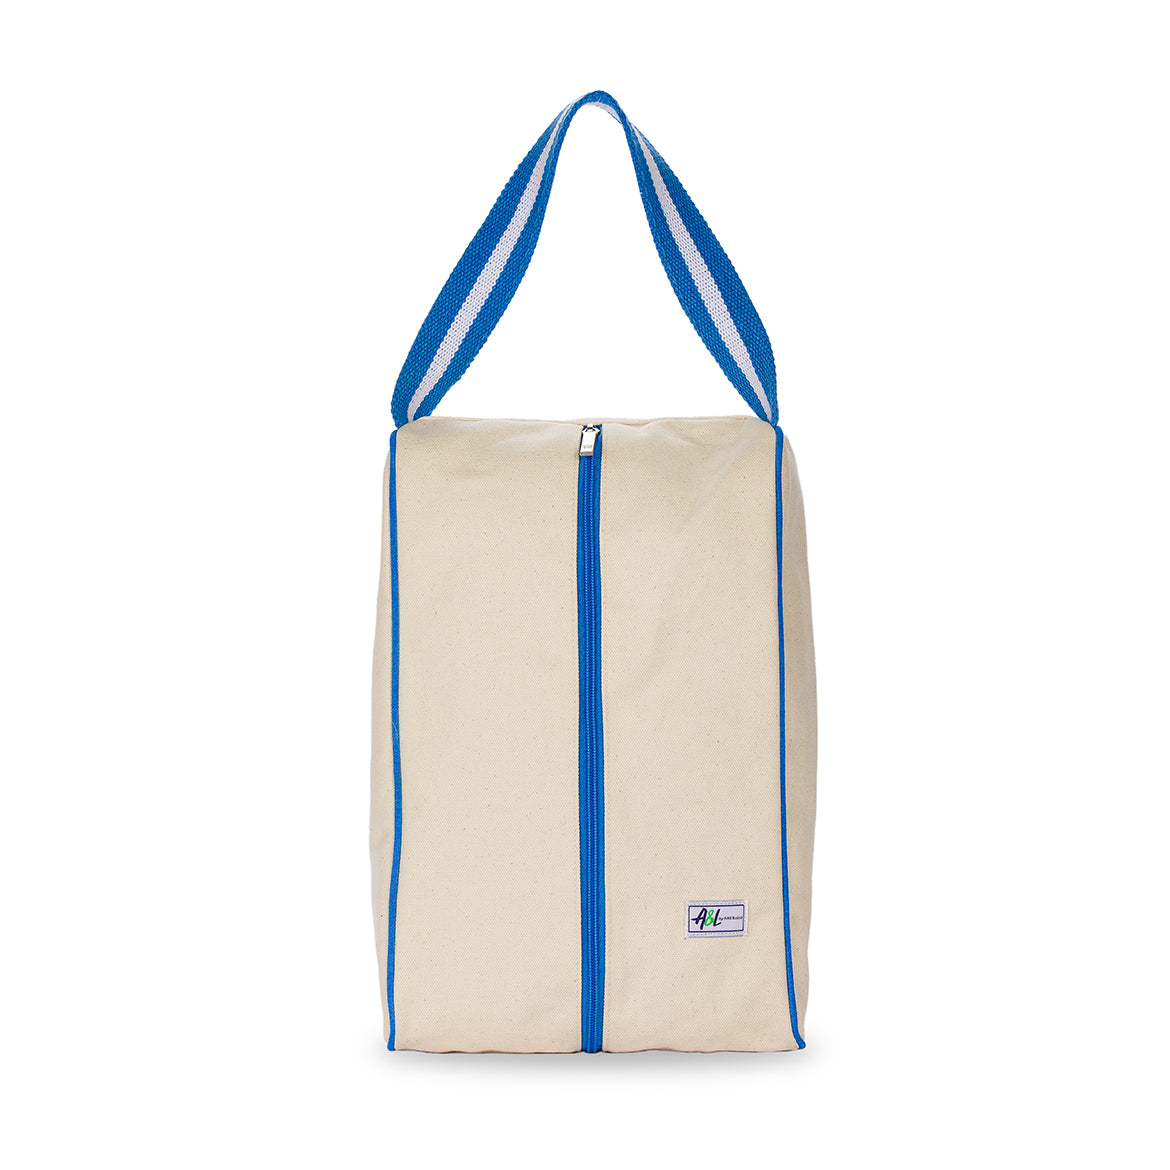 rectangular tan canvas shoe bag with bright blue handles.